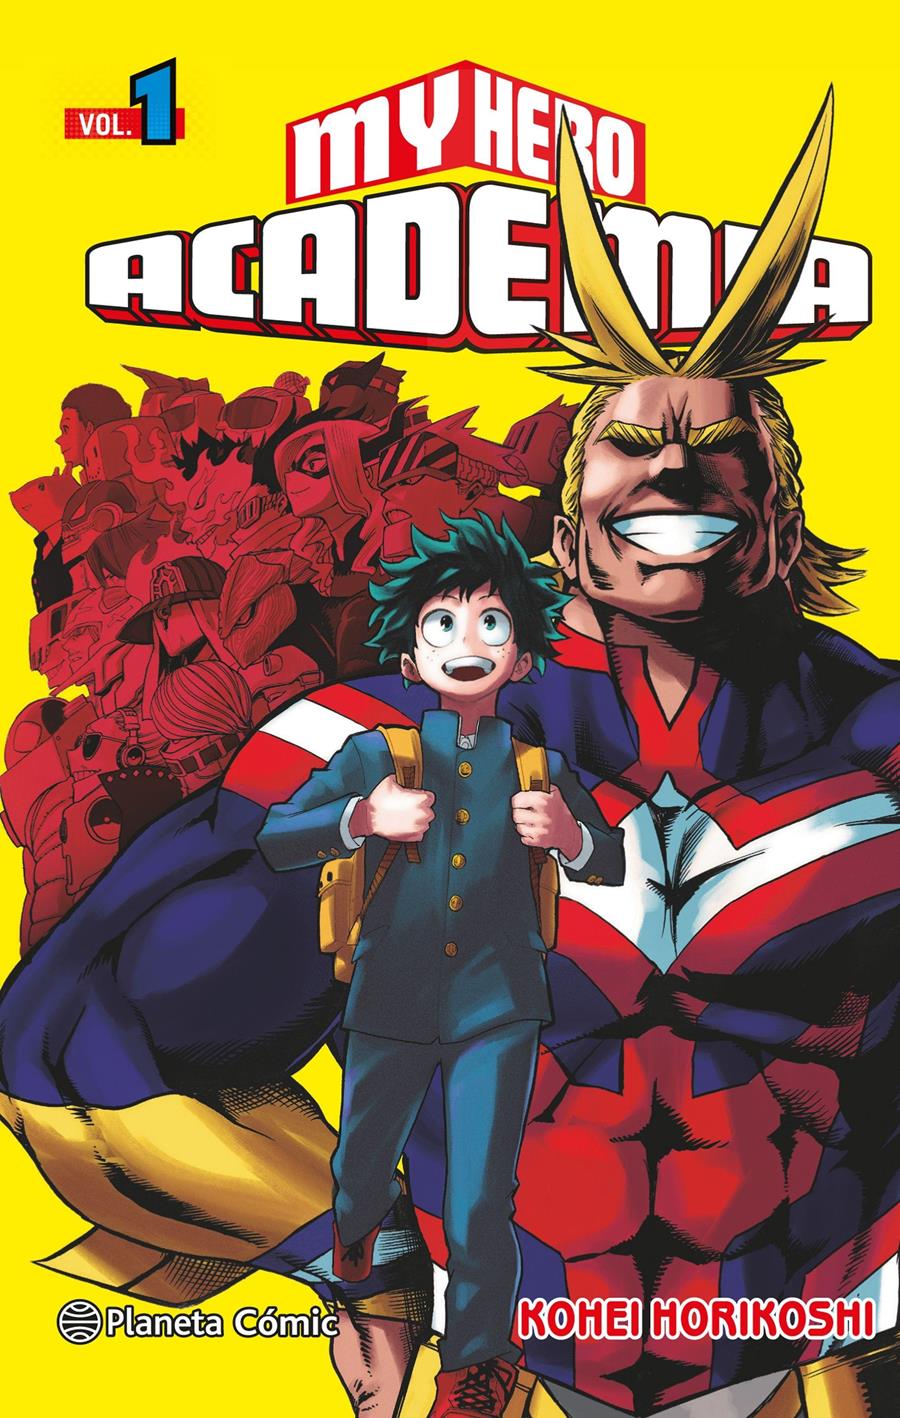 My Hero Academia nº01 | N1016-PLAN12 | Kohei Horikoshi | Terra de Còmic - Tu tienda de cómics online especializada en cómics, manga y merchandising